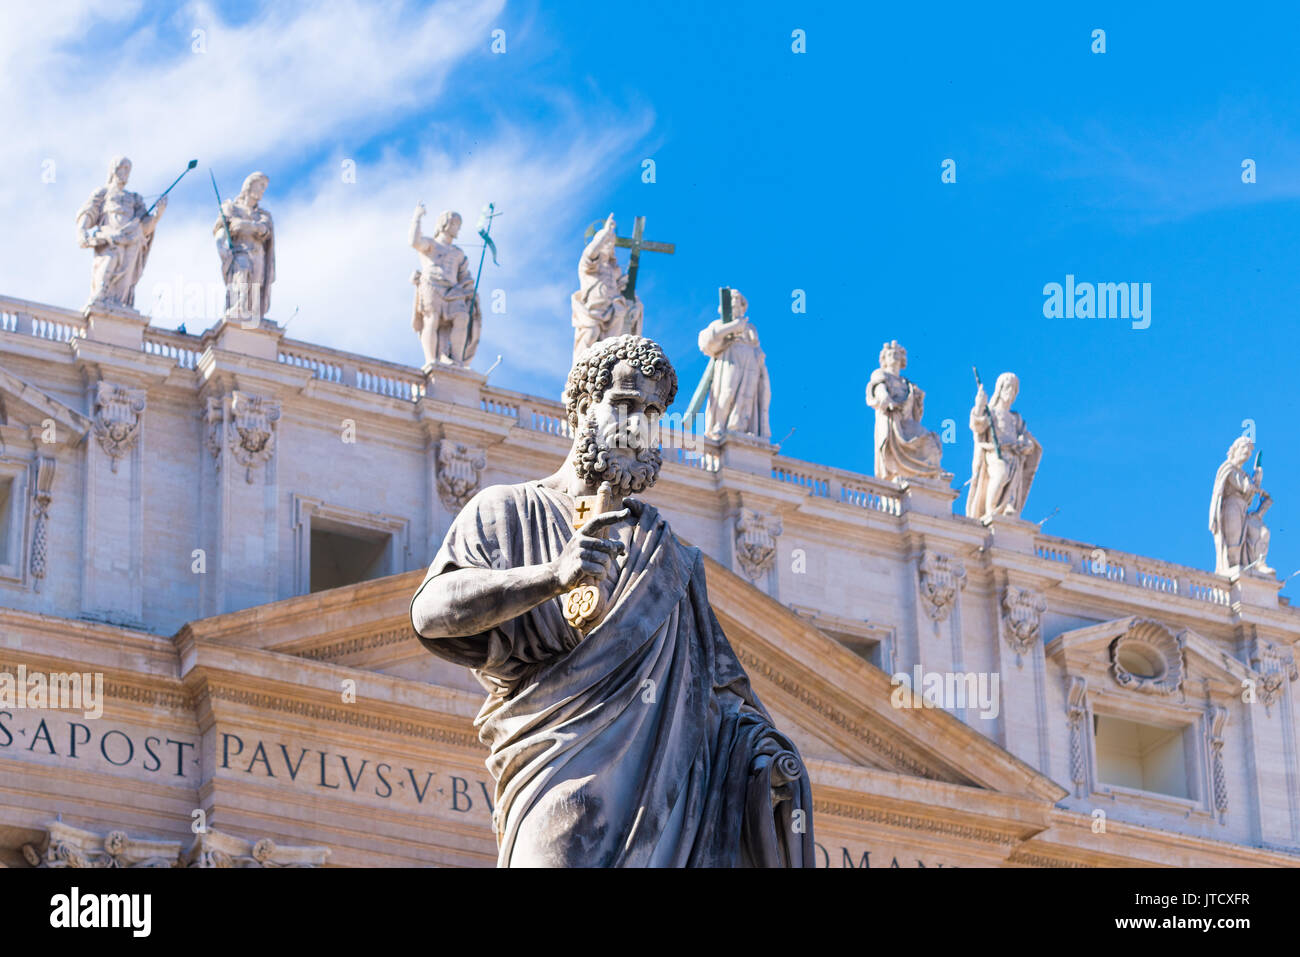 VATICAN CITY, VATICAN - OCTOBER 16, 2016: Statue Saint Peter in front of St Peter's Basilica on piazza San Pietro Stock Photo